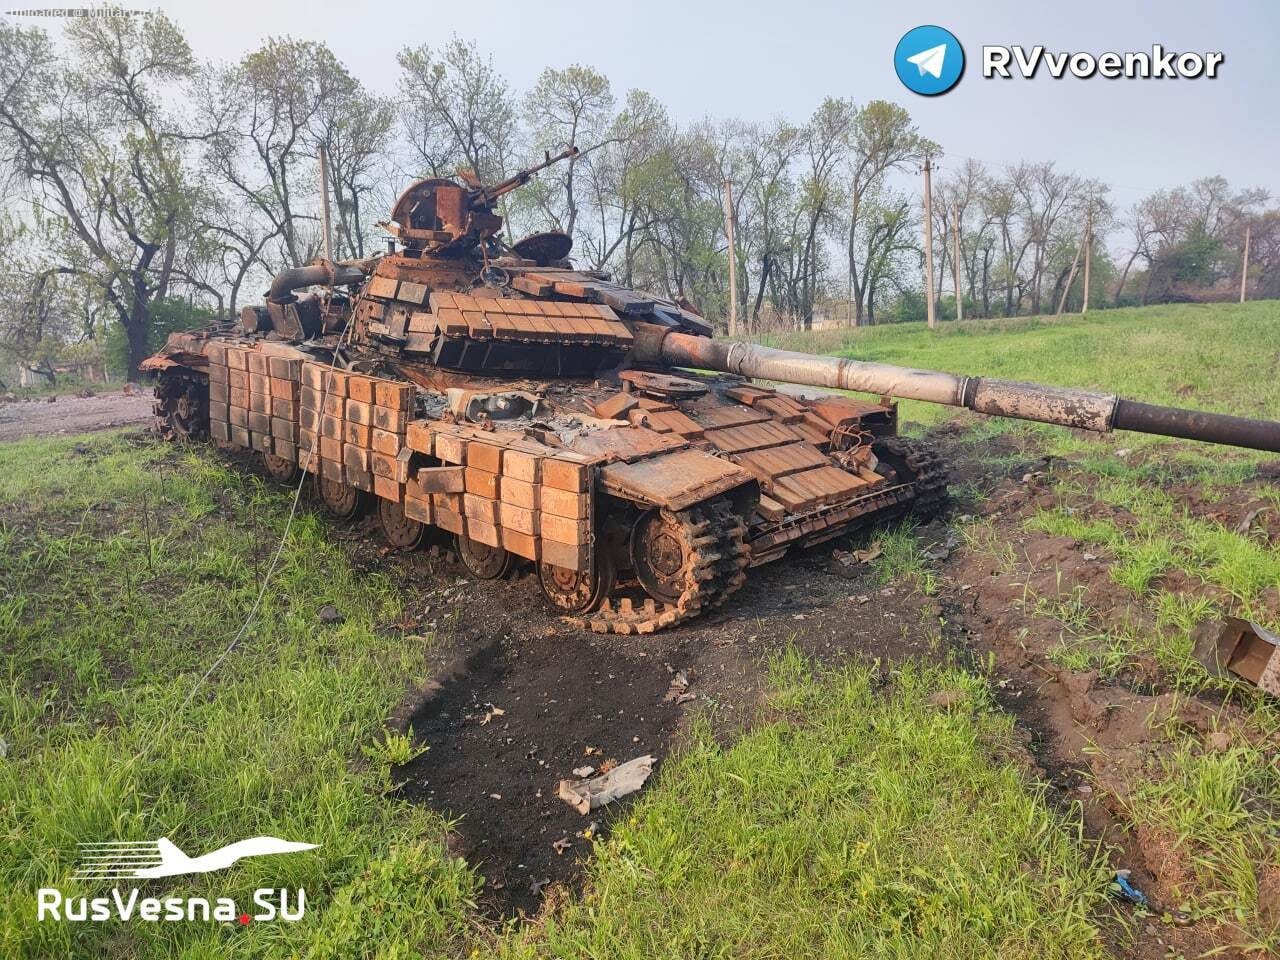 A_Ukrainian_T-64BV_obr__2017_was_destroy